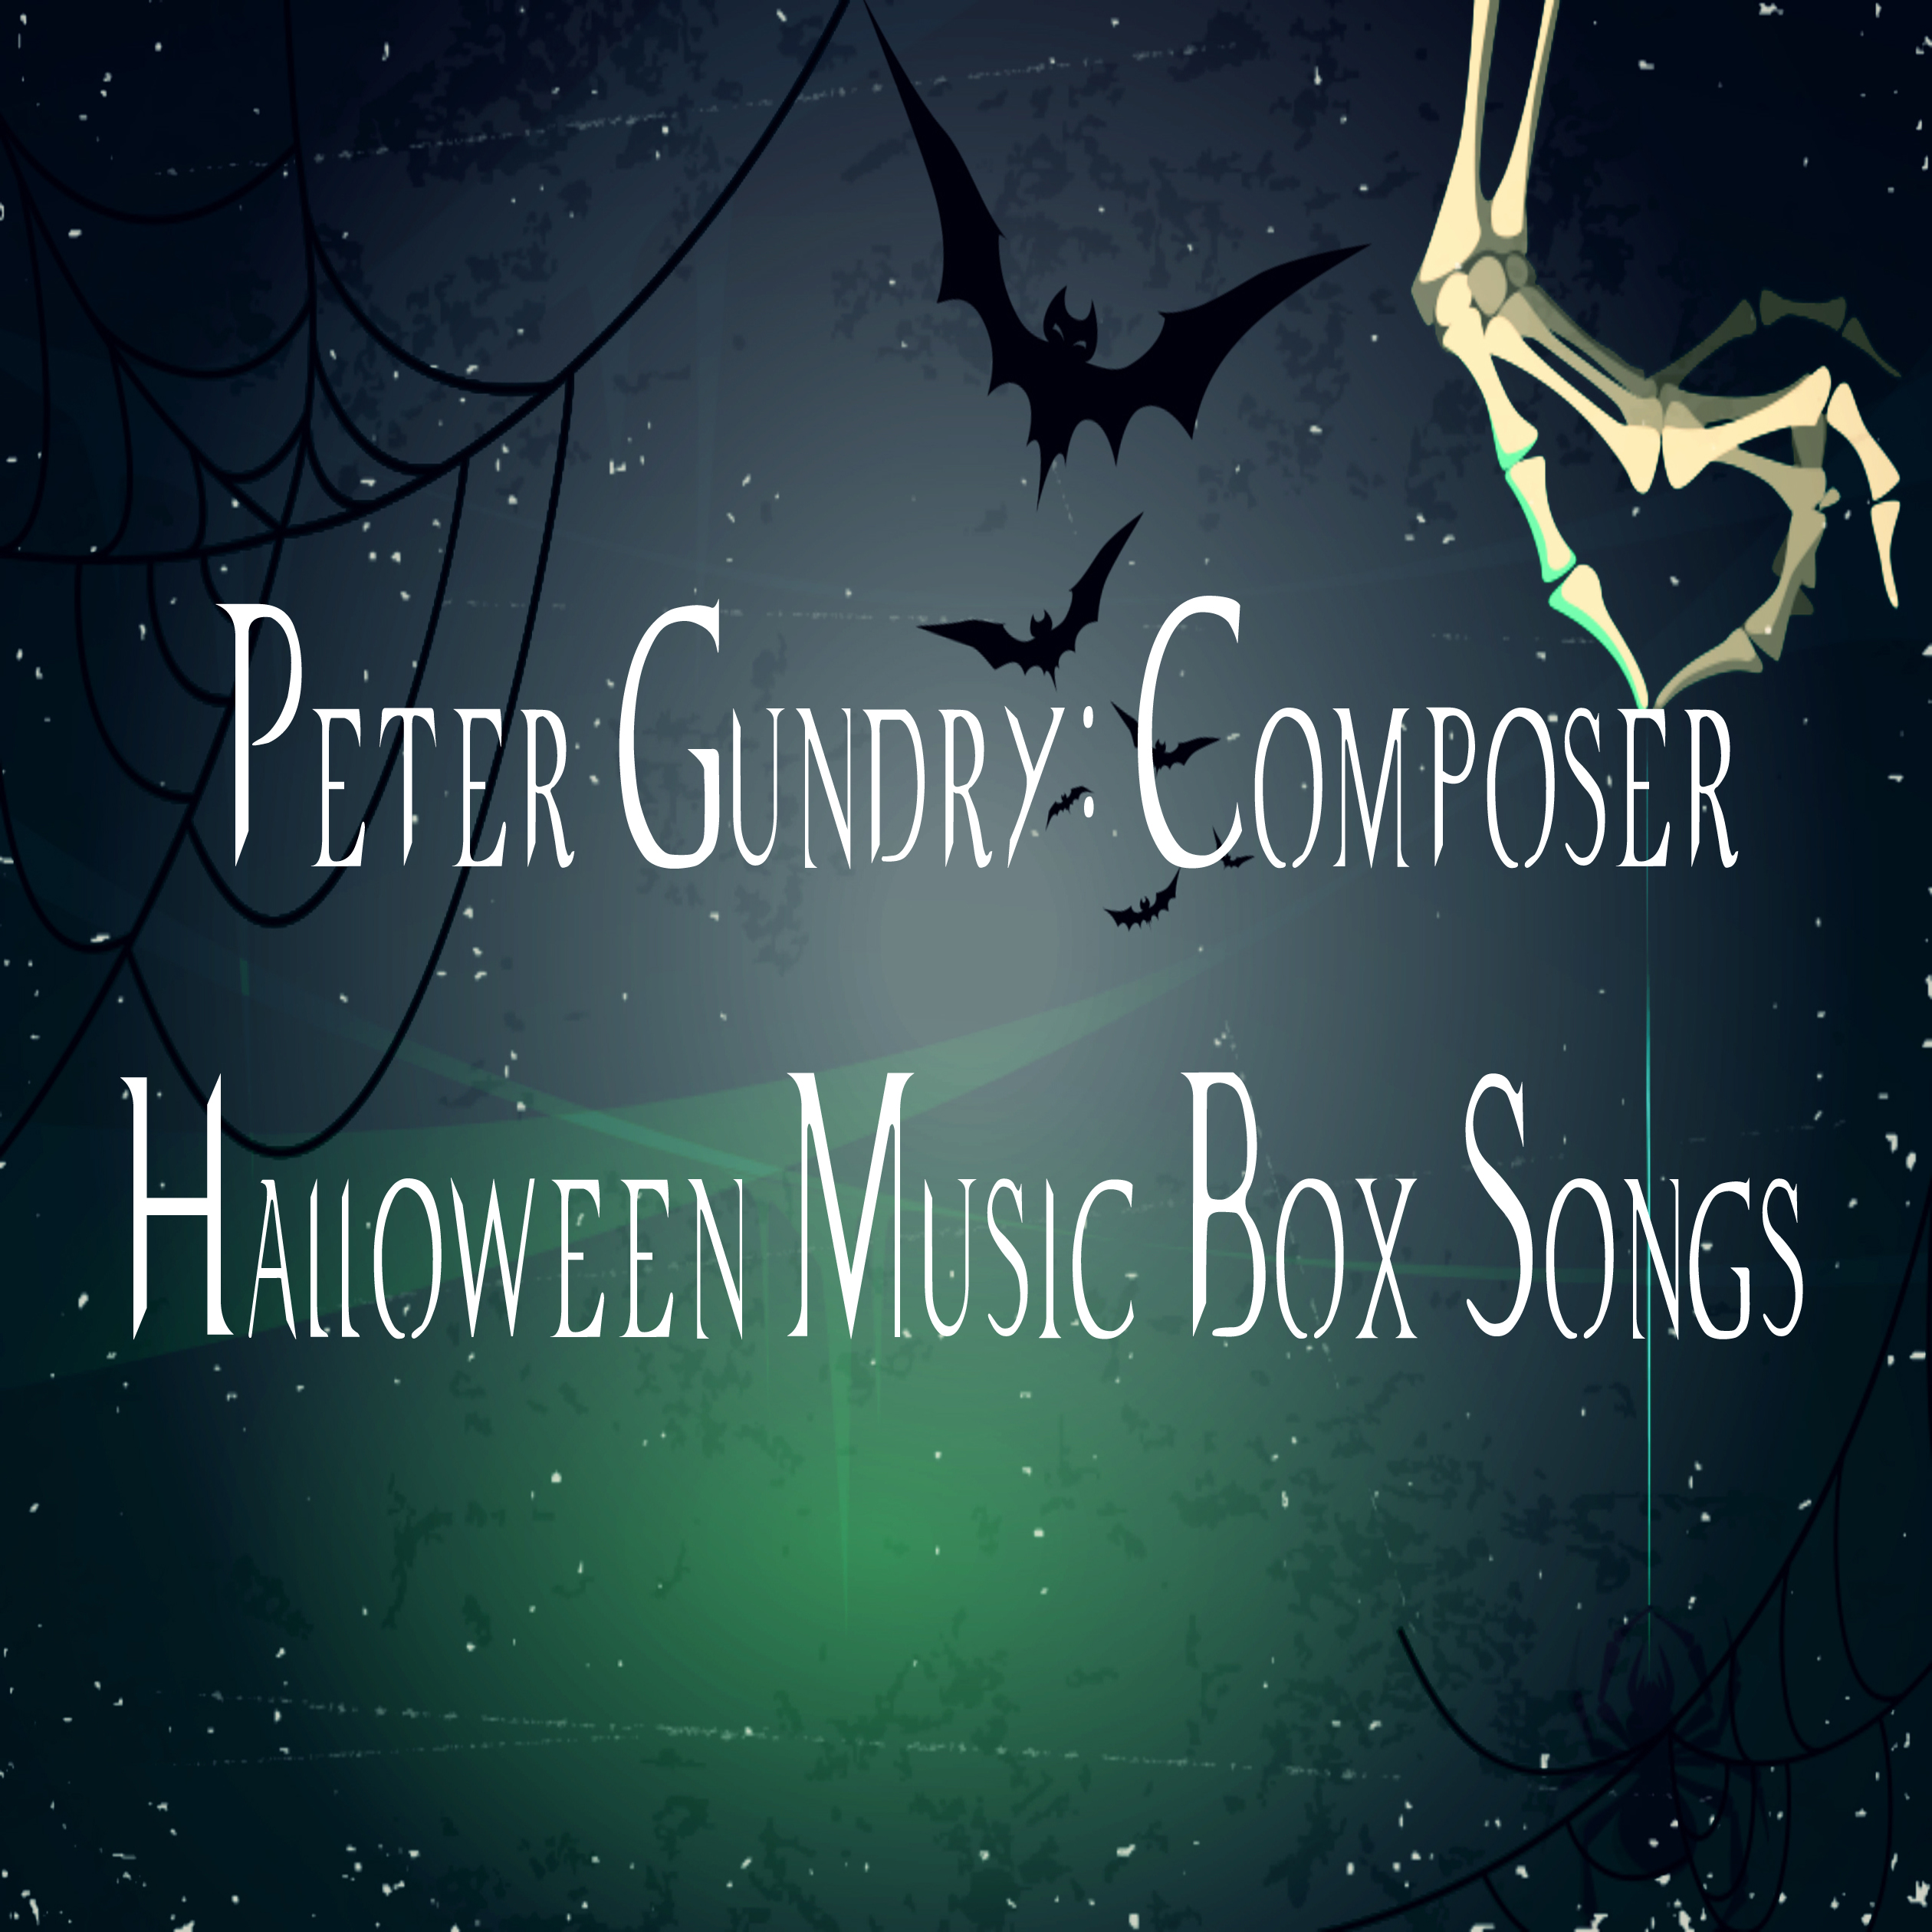 Peter Gundry on  Music